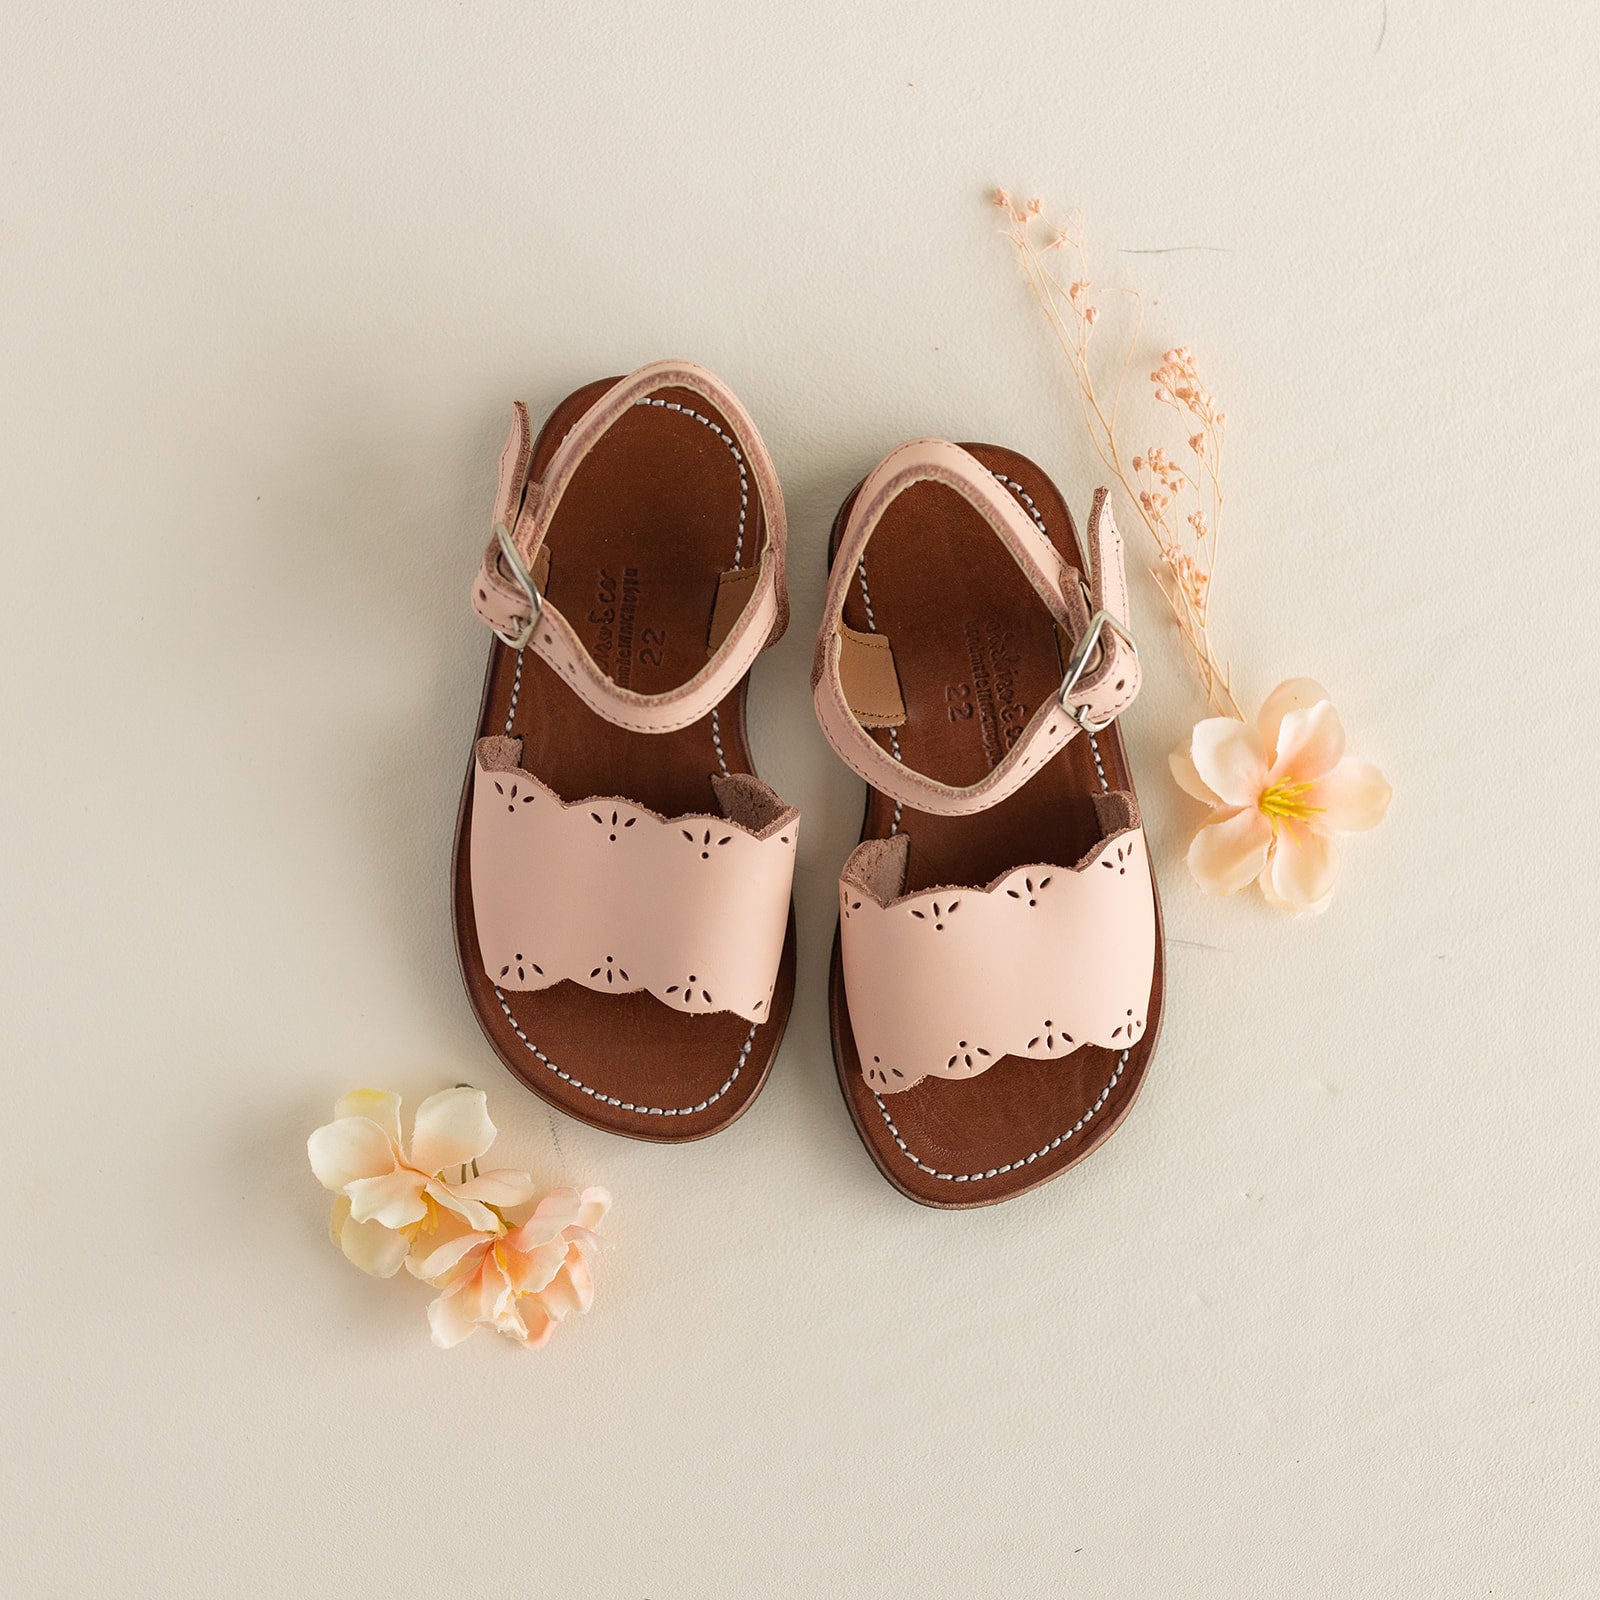 Adelisa & Co. SS24 Leather Sandal Collection - Handmade in Nicaragua